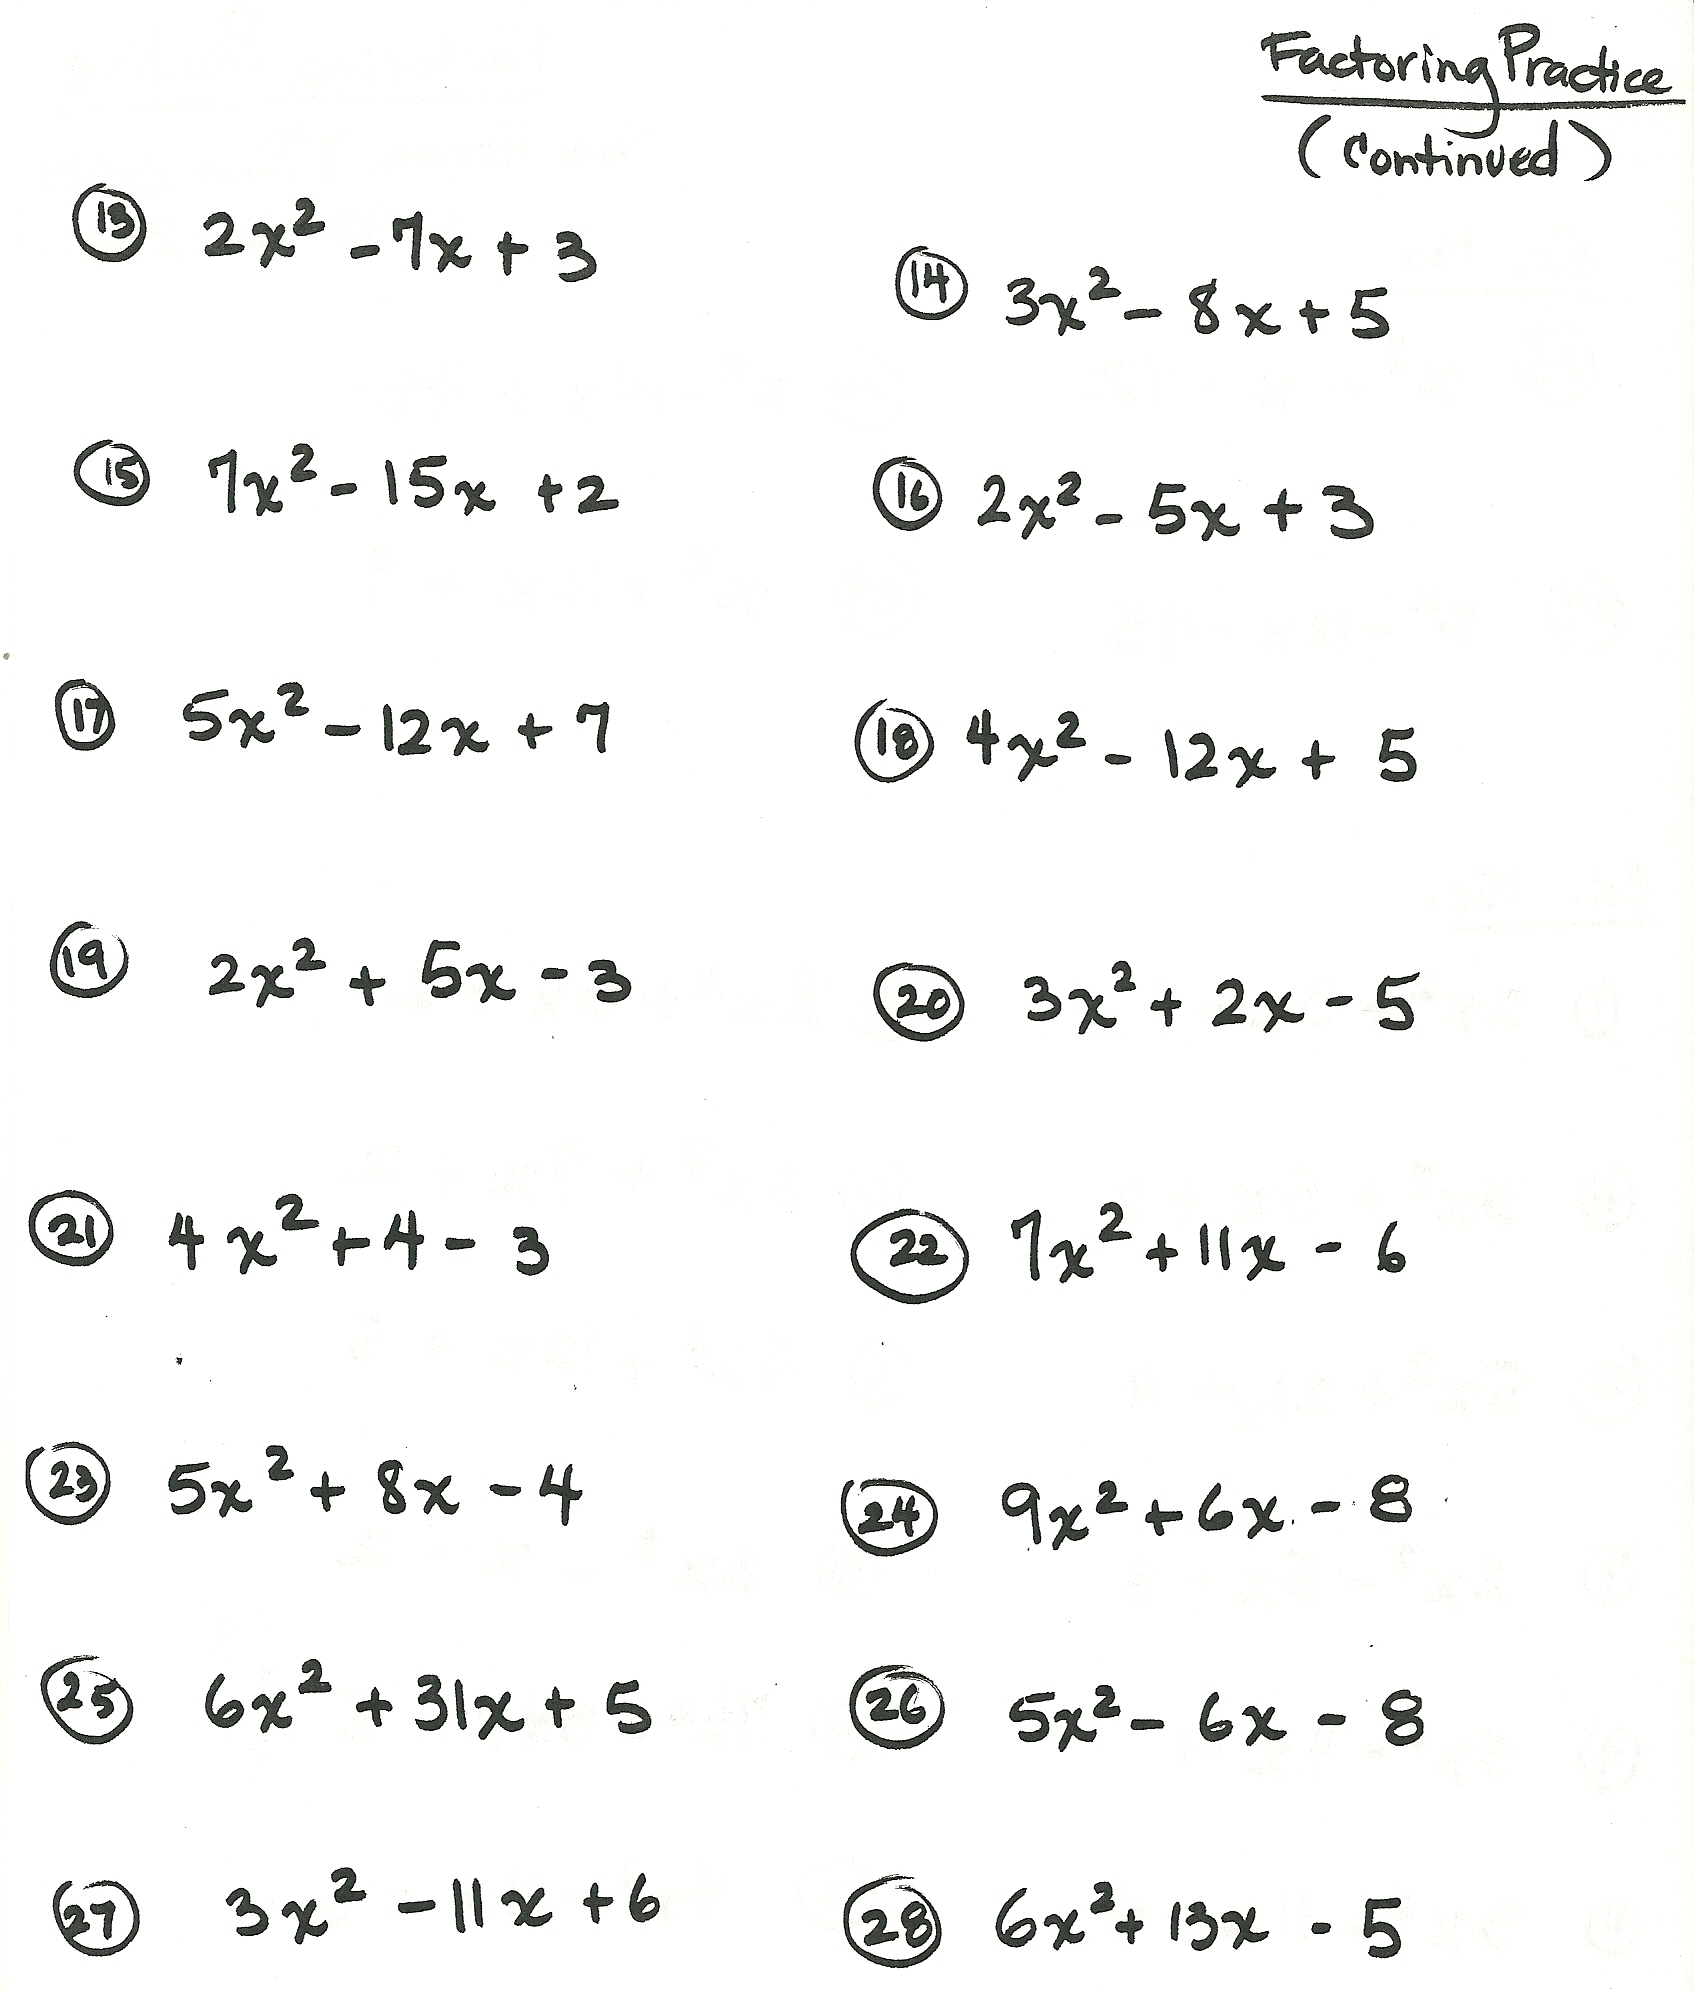 Algebra 1 Factoring Worksheet